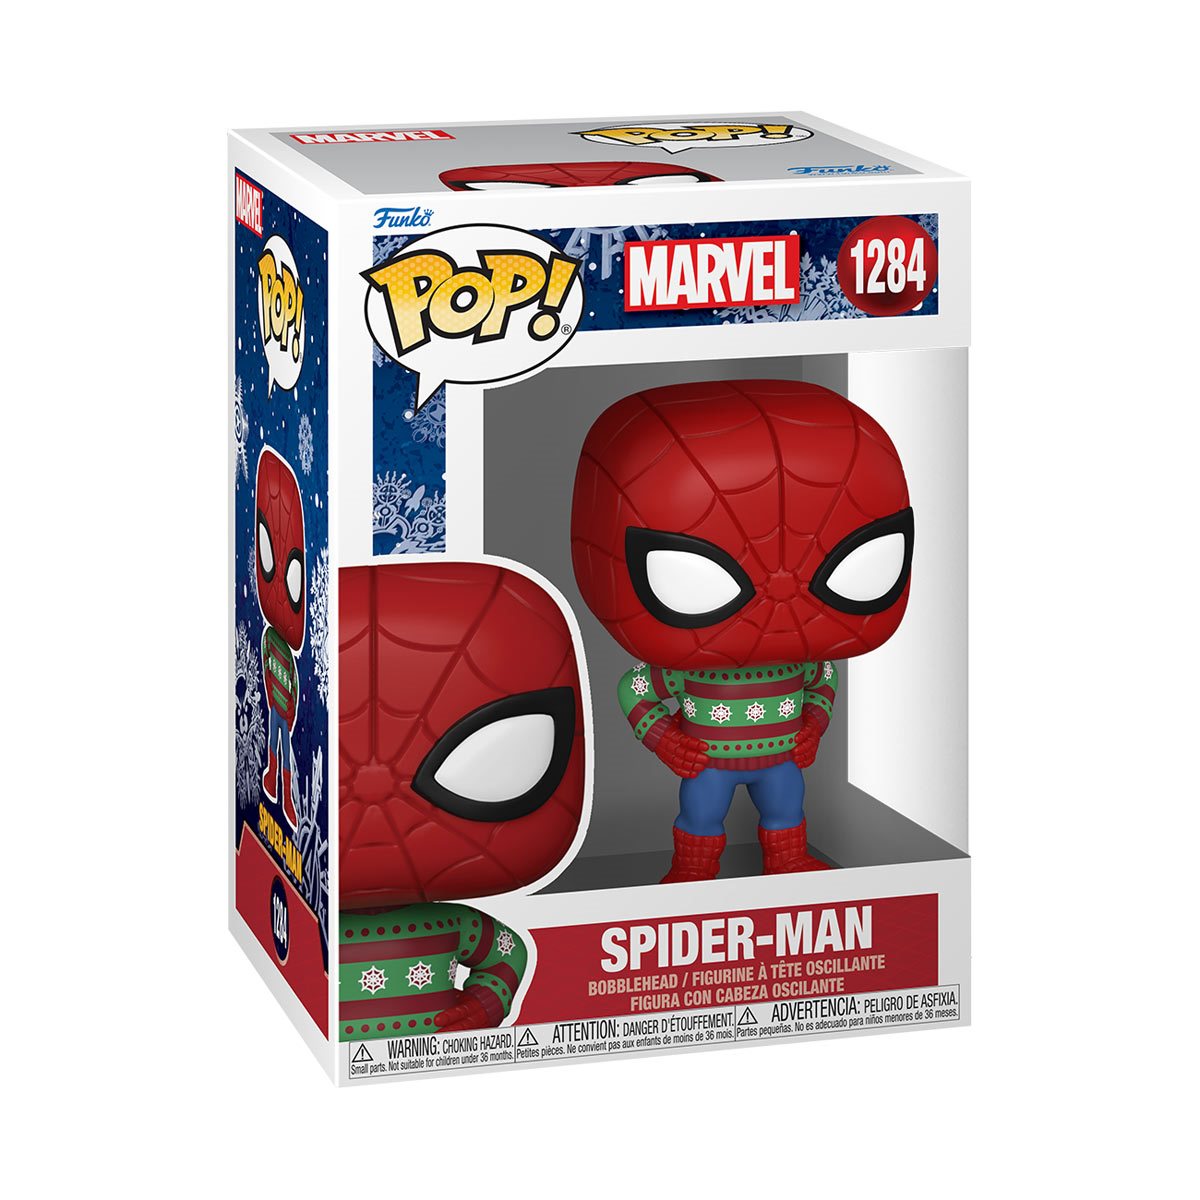 Marvel Holiday Spider-Man Sweater Vinyl Figure By Funko Pop!